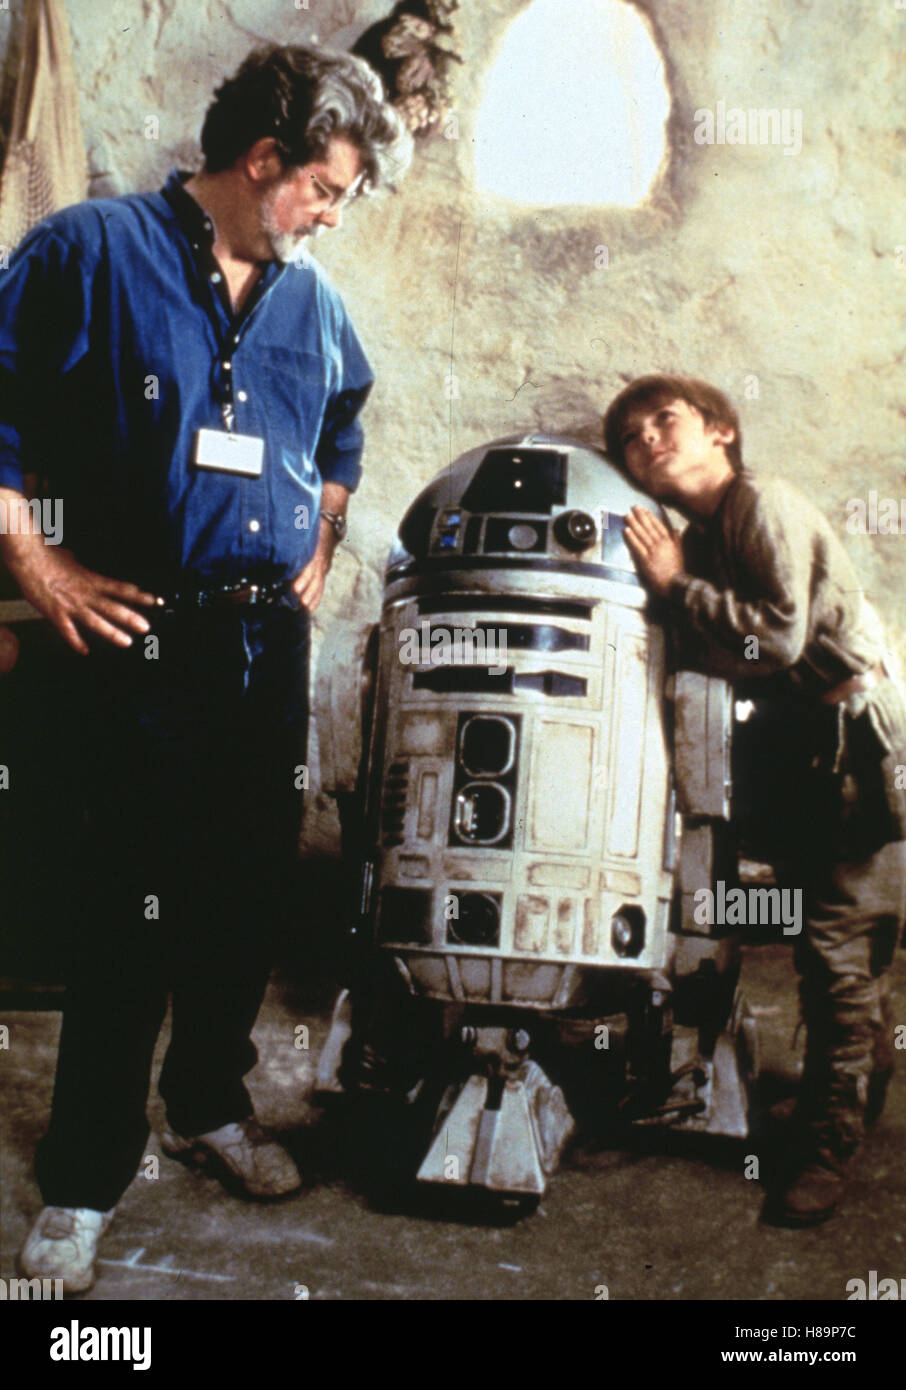 Star wars, (STAR WARS: EPISODE 1 - THE PHANTOM MENACE) USA 1999, Regie: George Lucas, GEORGE LUCAS, JAKE LLOYD, Stichwort: Roboter Stock Photo